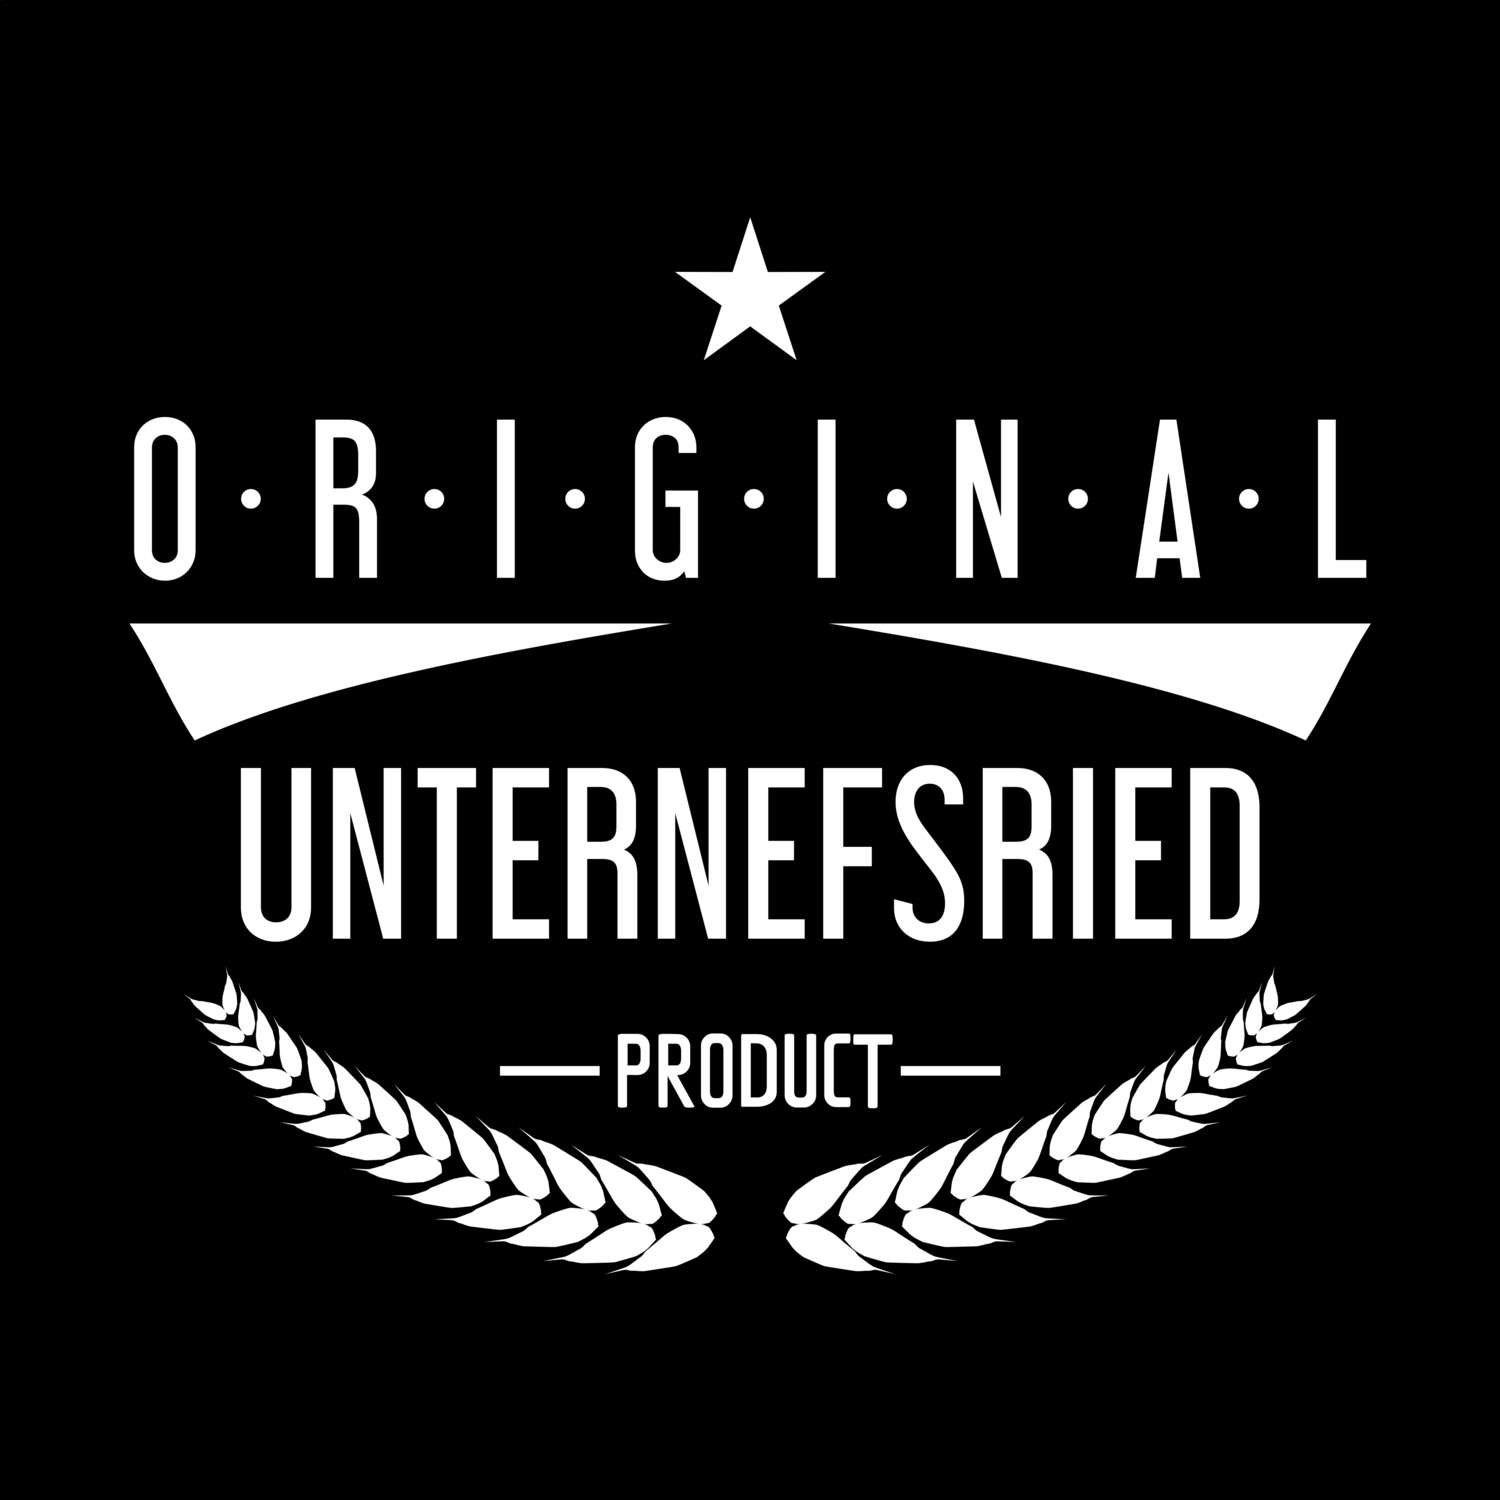 Unternefsried T-Shirt »Original Product«